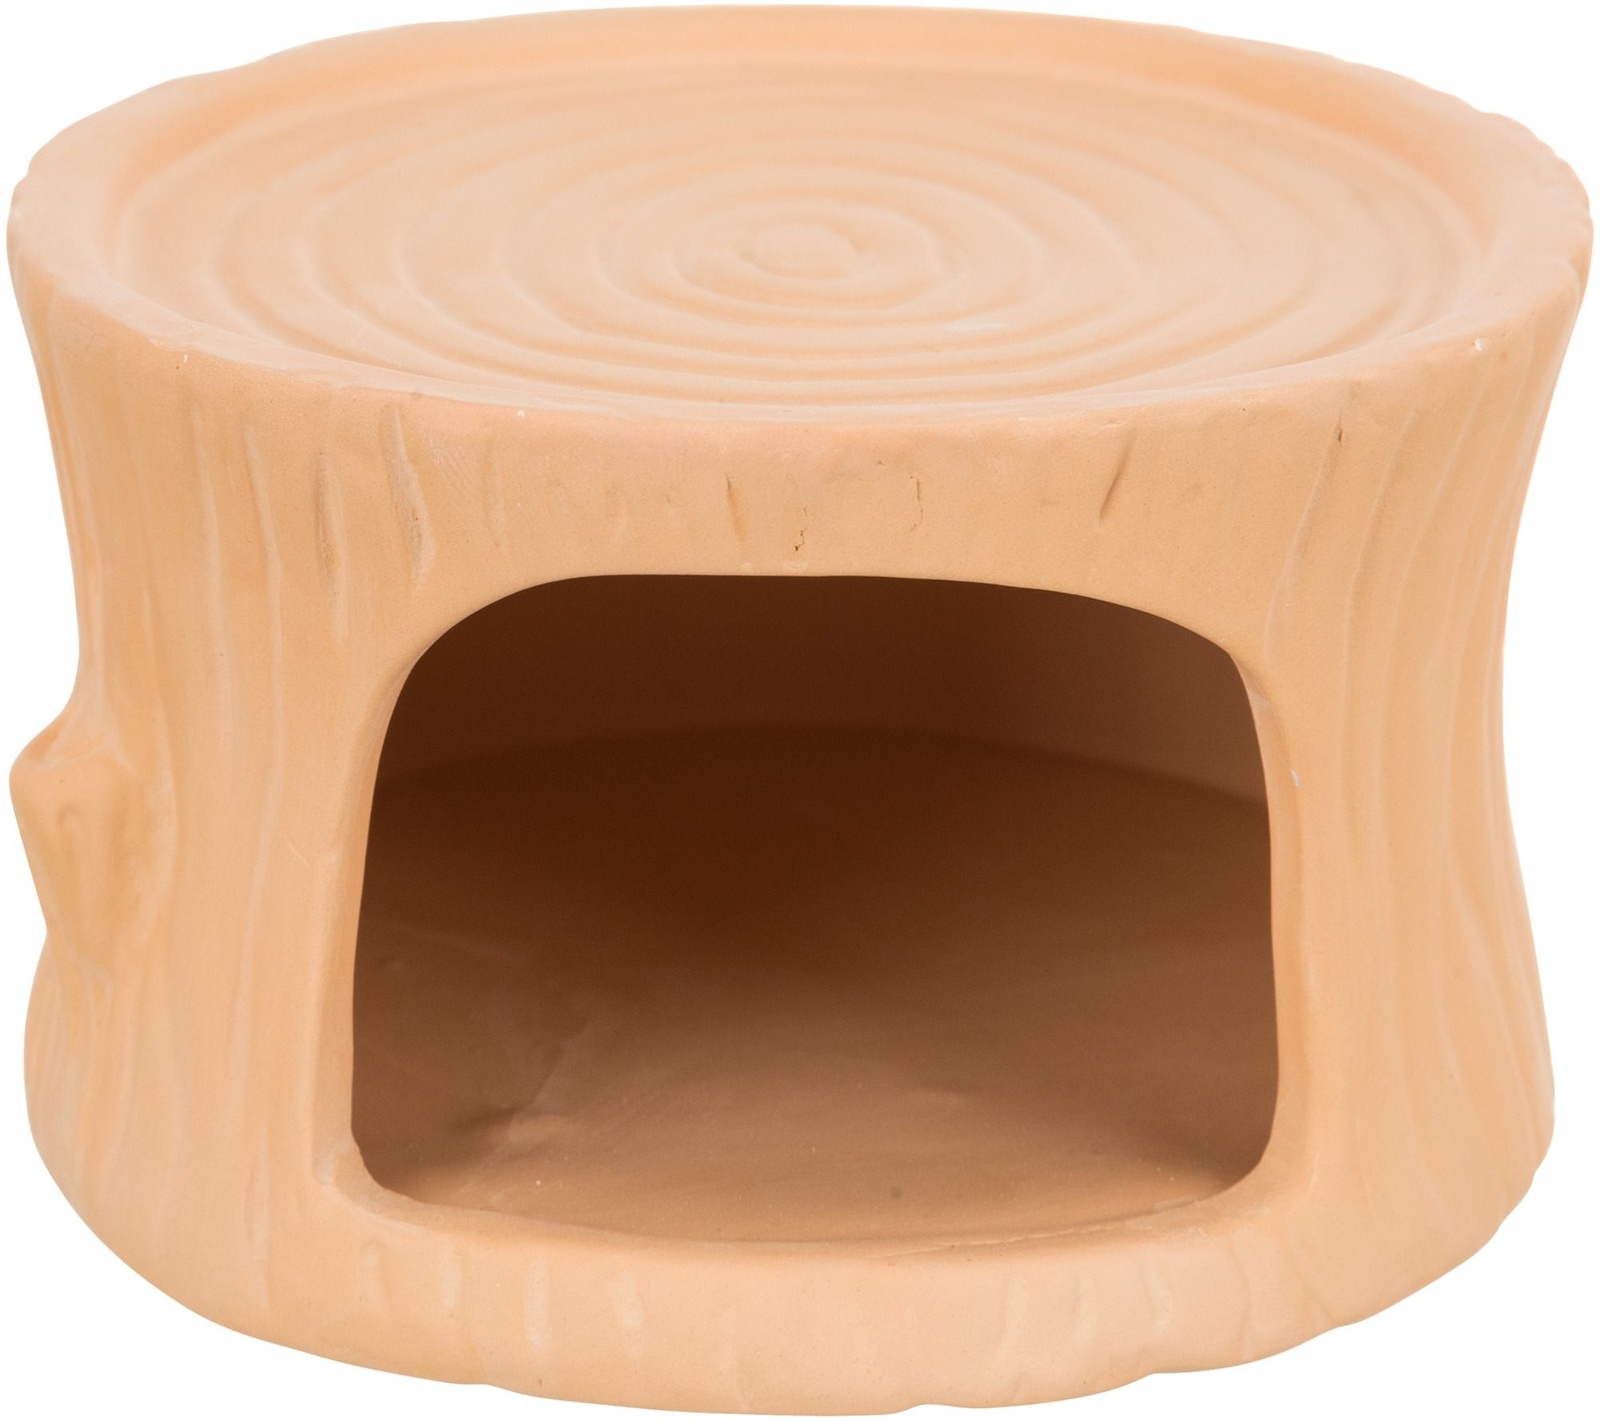 Trixie Trixie домик для мышей и хомяков, керамика, 11 x 6 x 10 см, терракотовый (275 г) trixie 6209 домик для хомяков кокос ф13х31 см шт